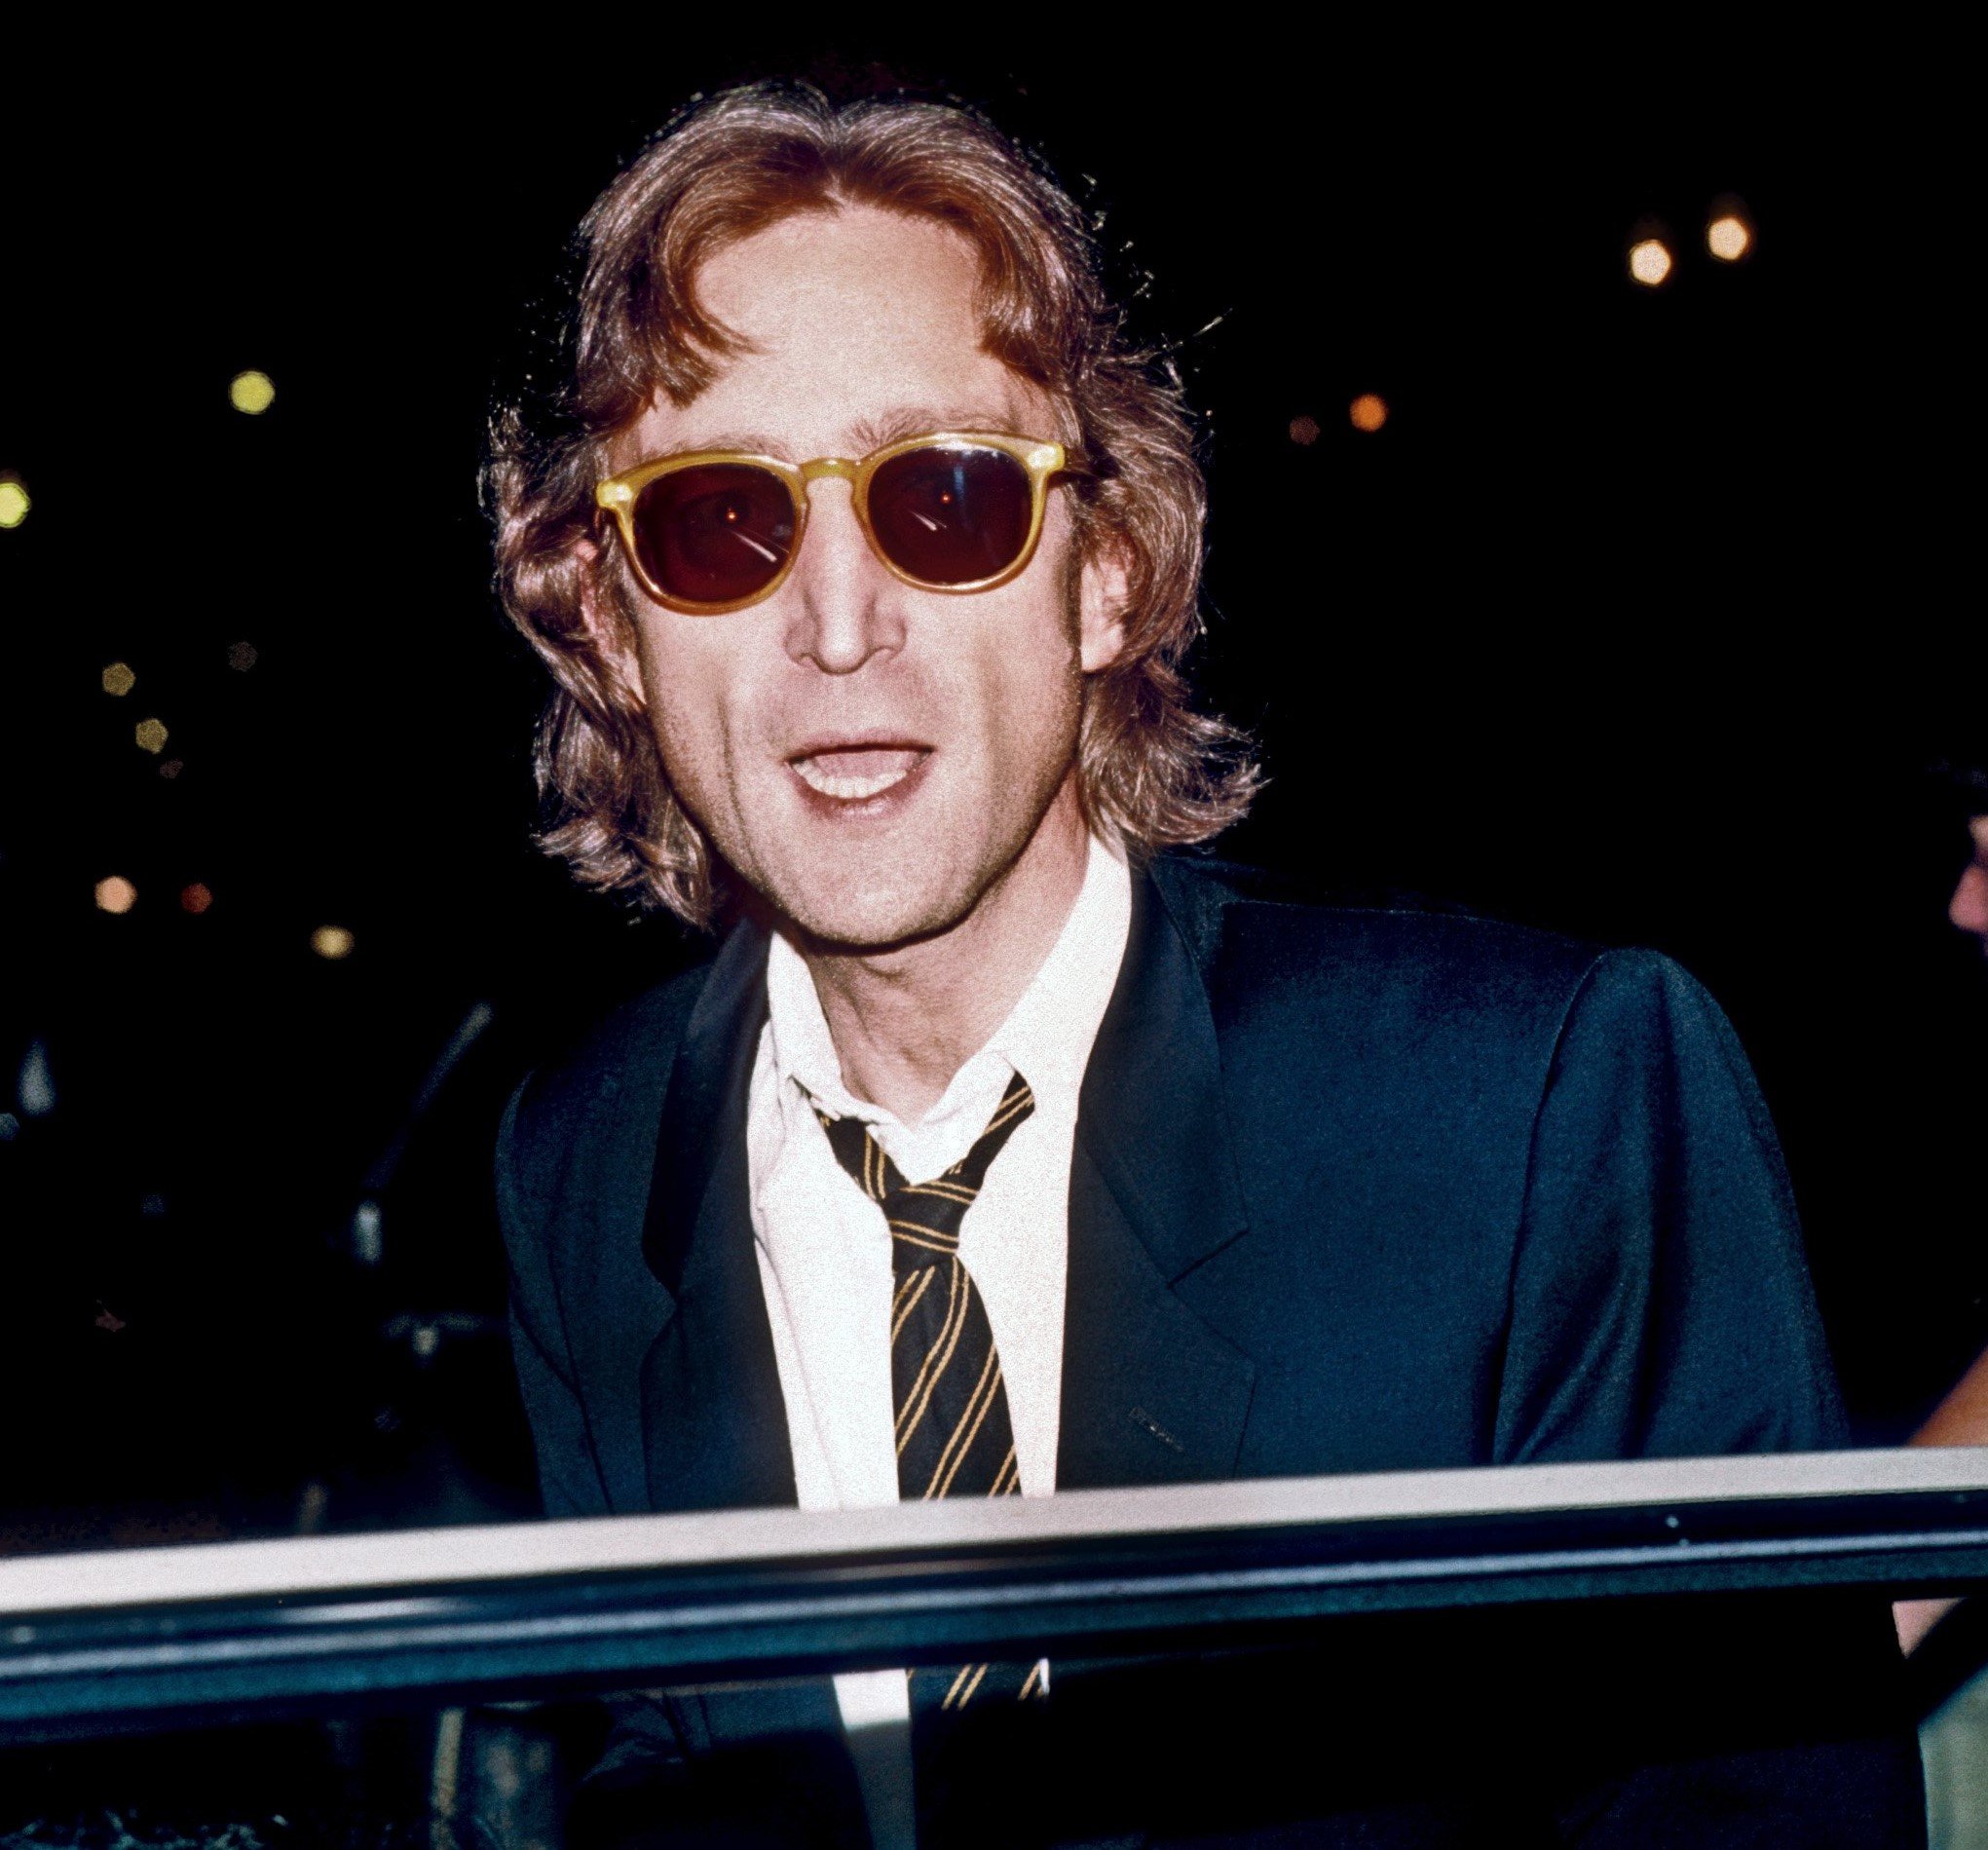 John Lennon near a car door